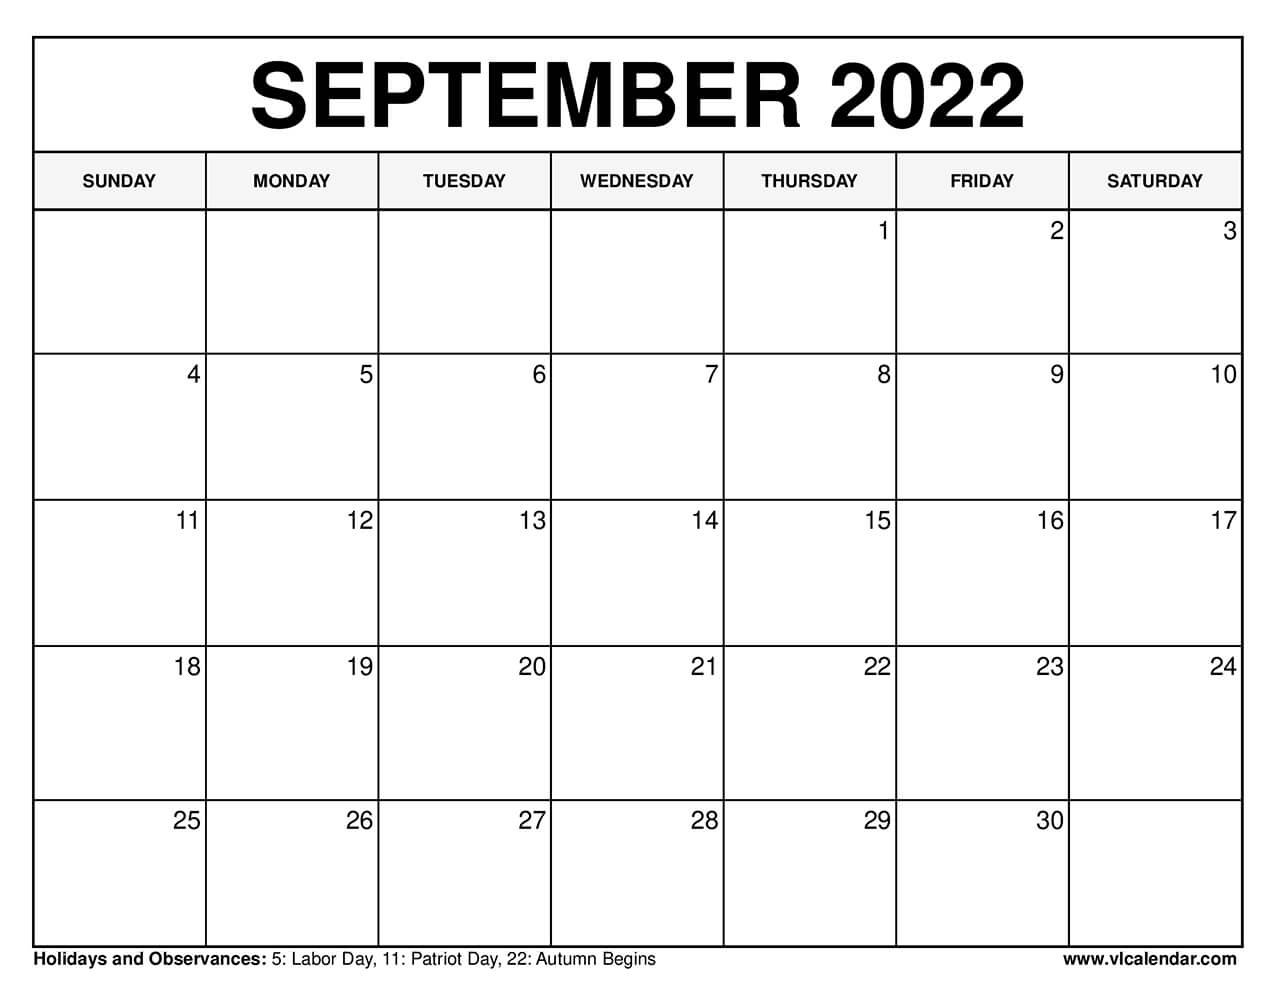 Printable September 2022 Calendar Templates with Holidays - VL Calendar